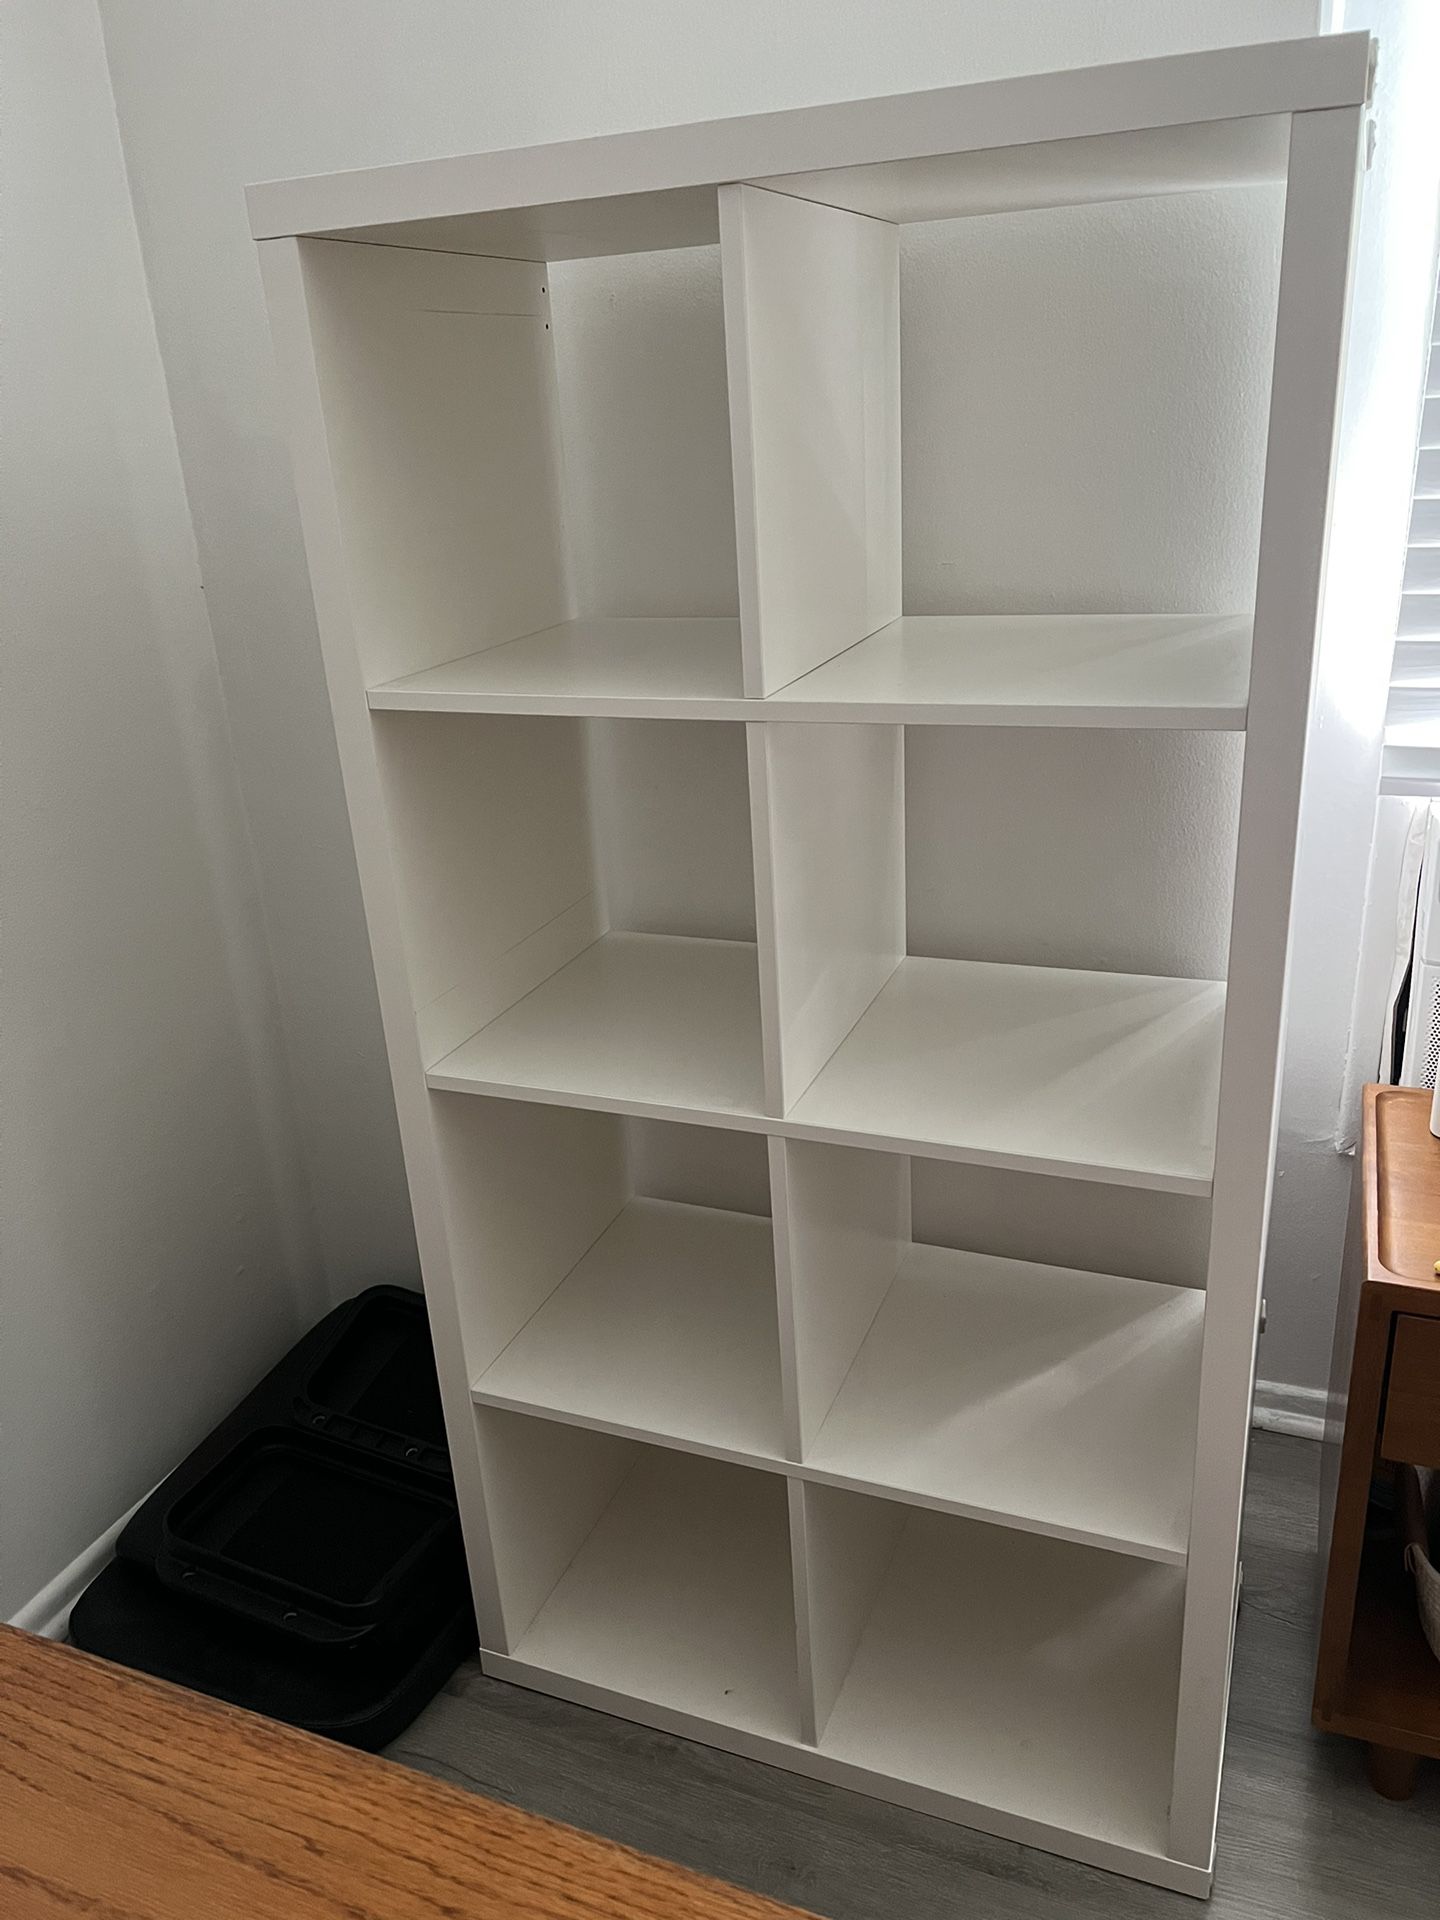 White IKEA Kallax Shelf